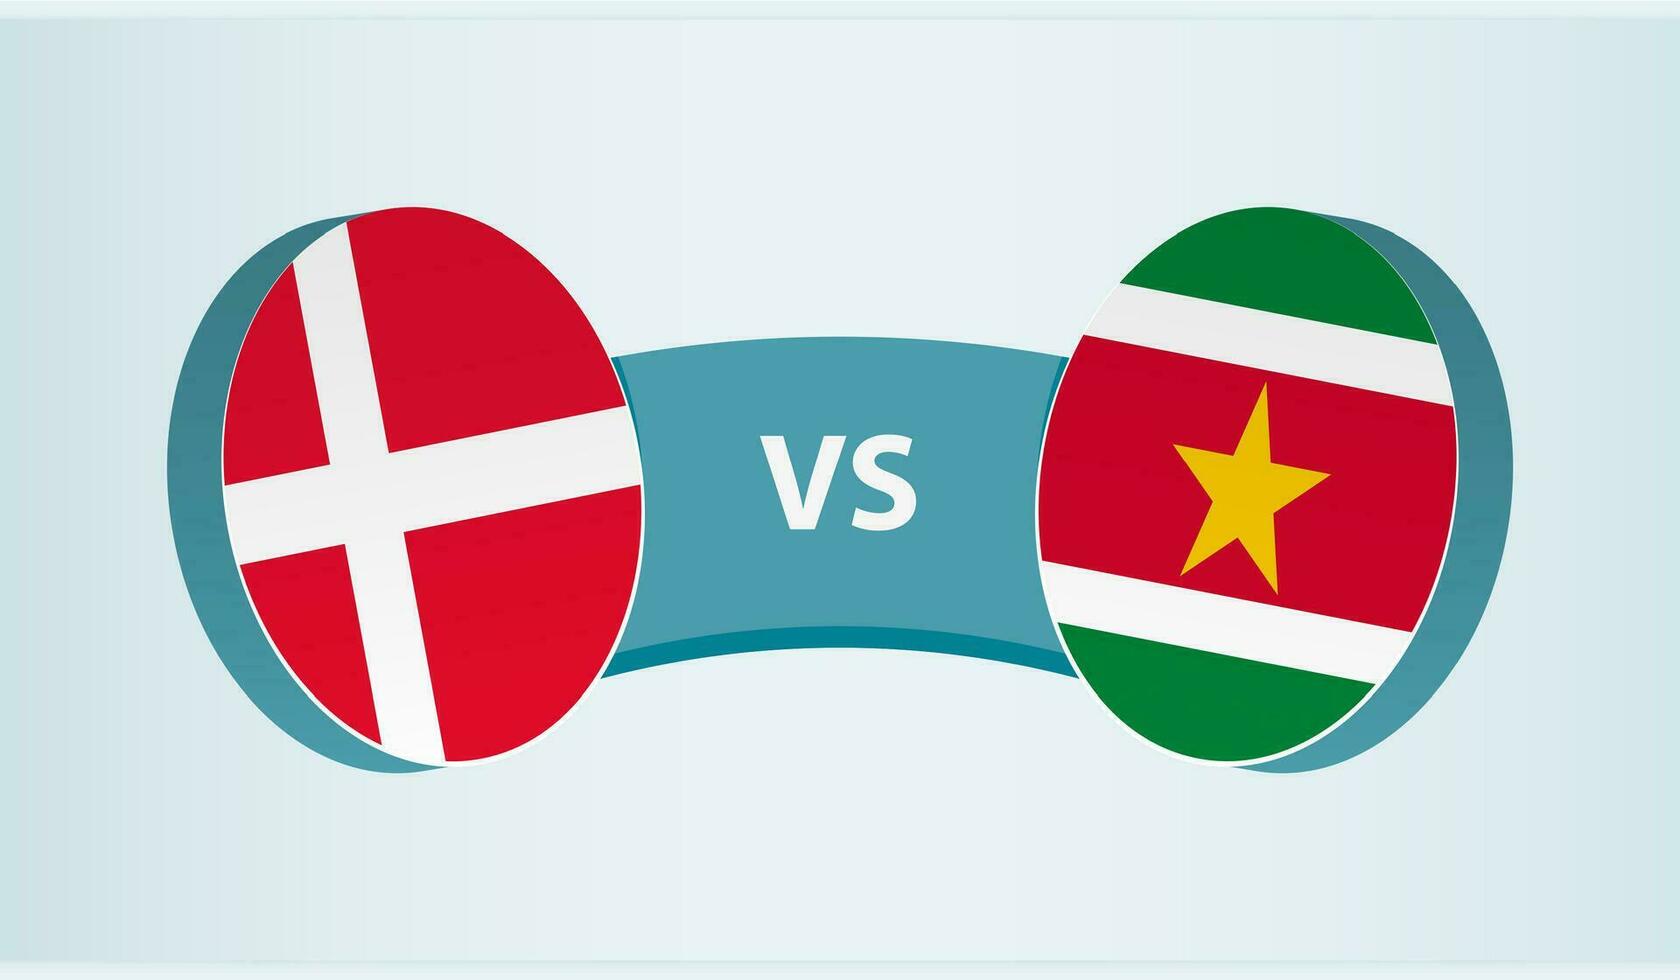 Denmark versus Suriname, team sports competition concept. vector